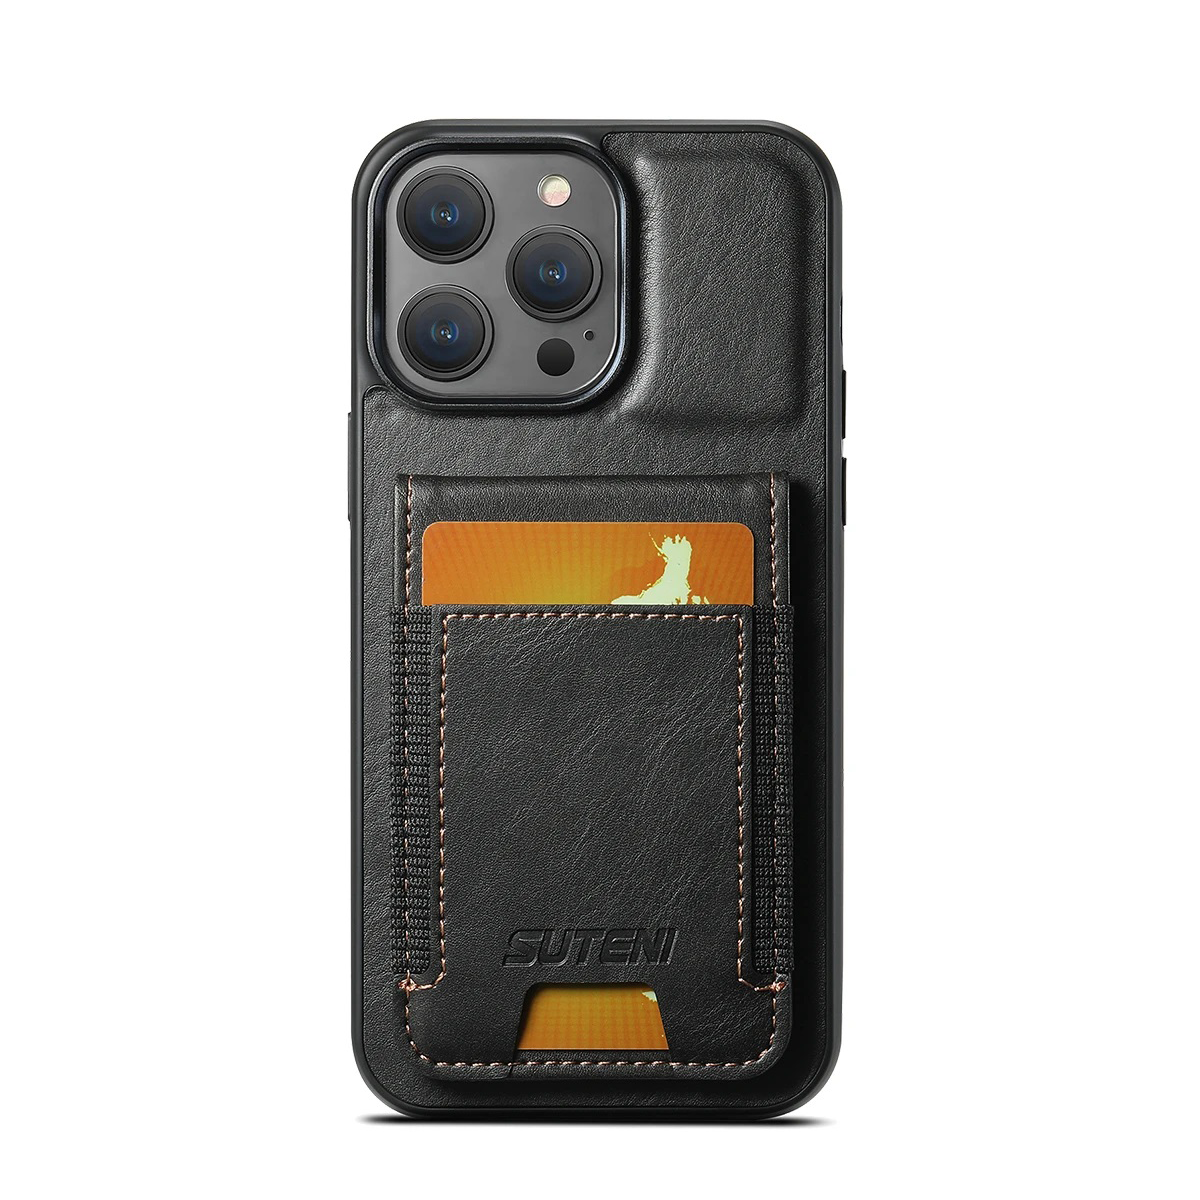 Multifunctional Luxury Leather Wallet iPhone Case Magnet Flip